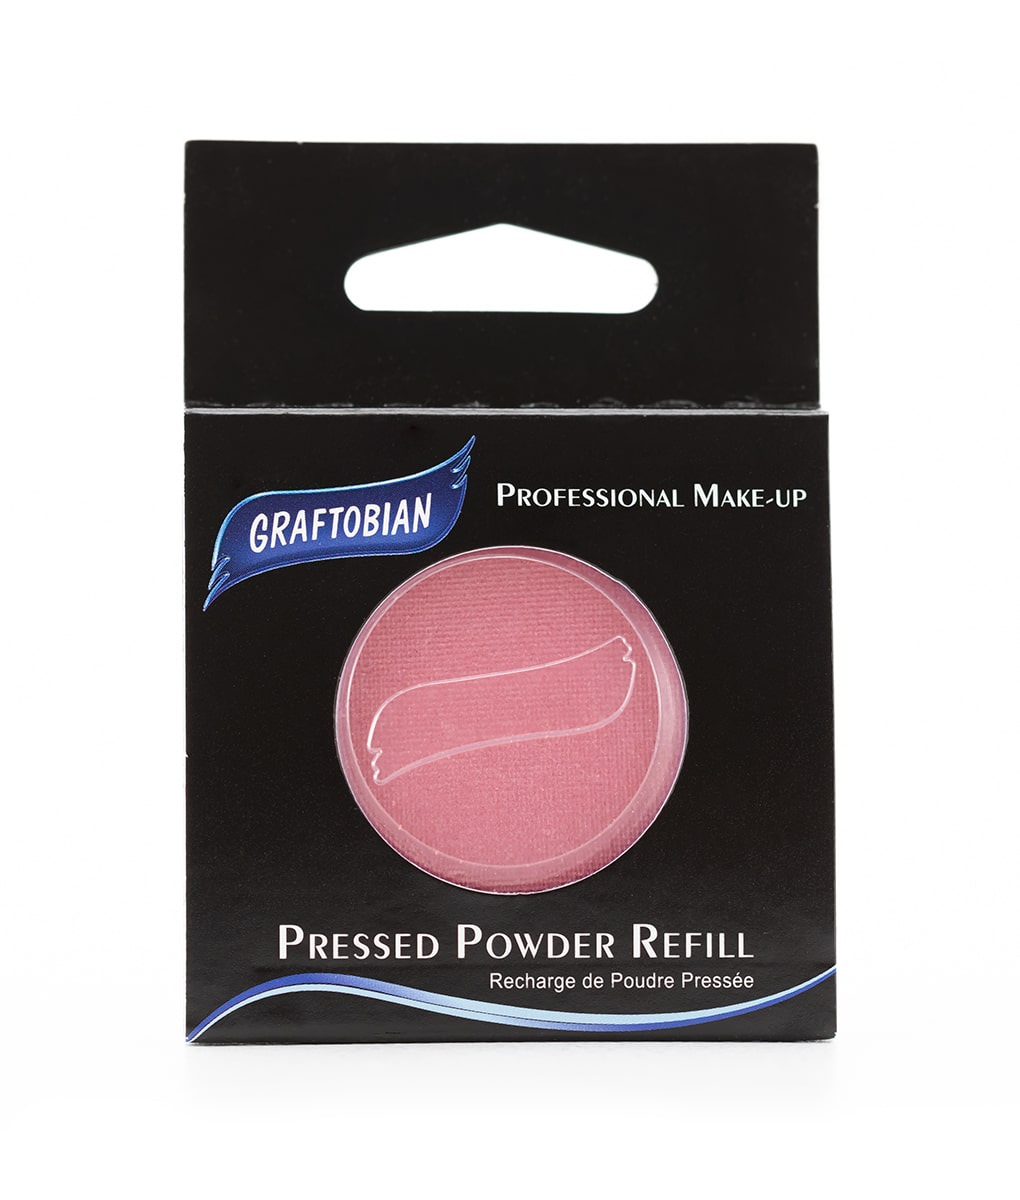 Pro Adhesive Remover – Graftobian Make-Up Company